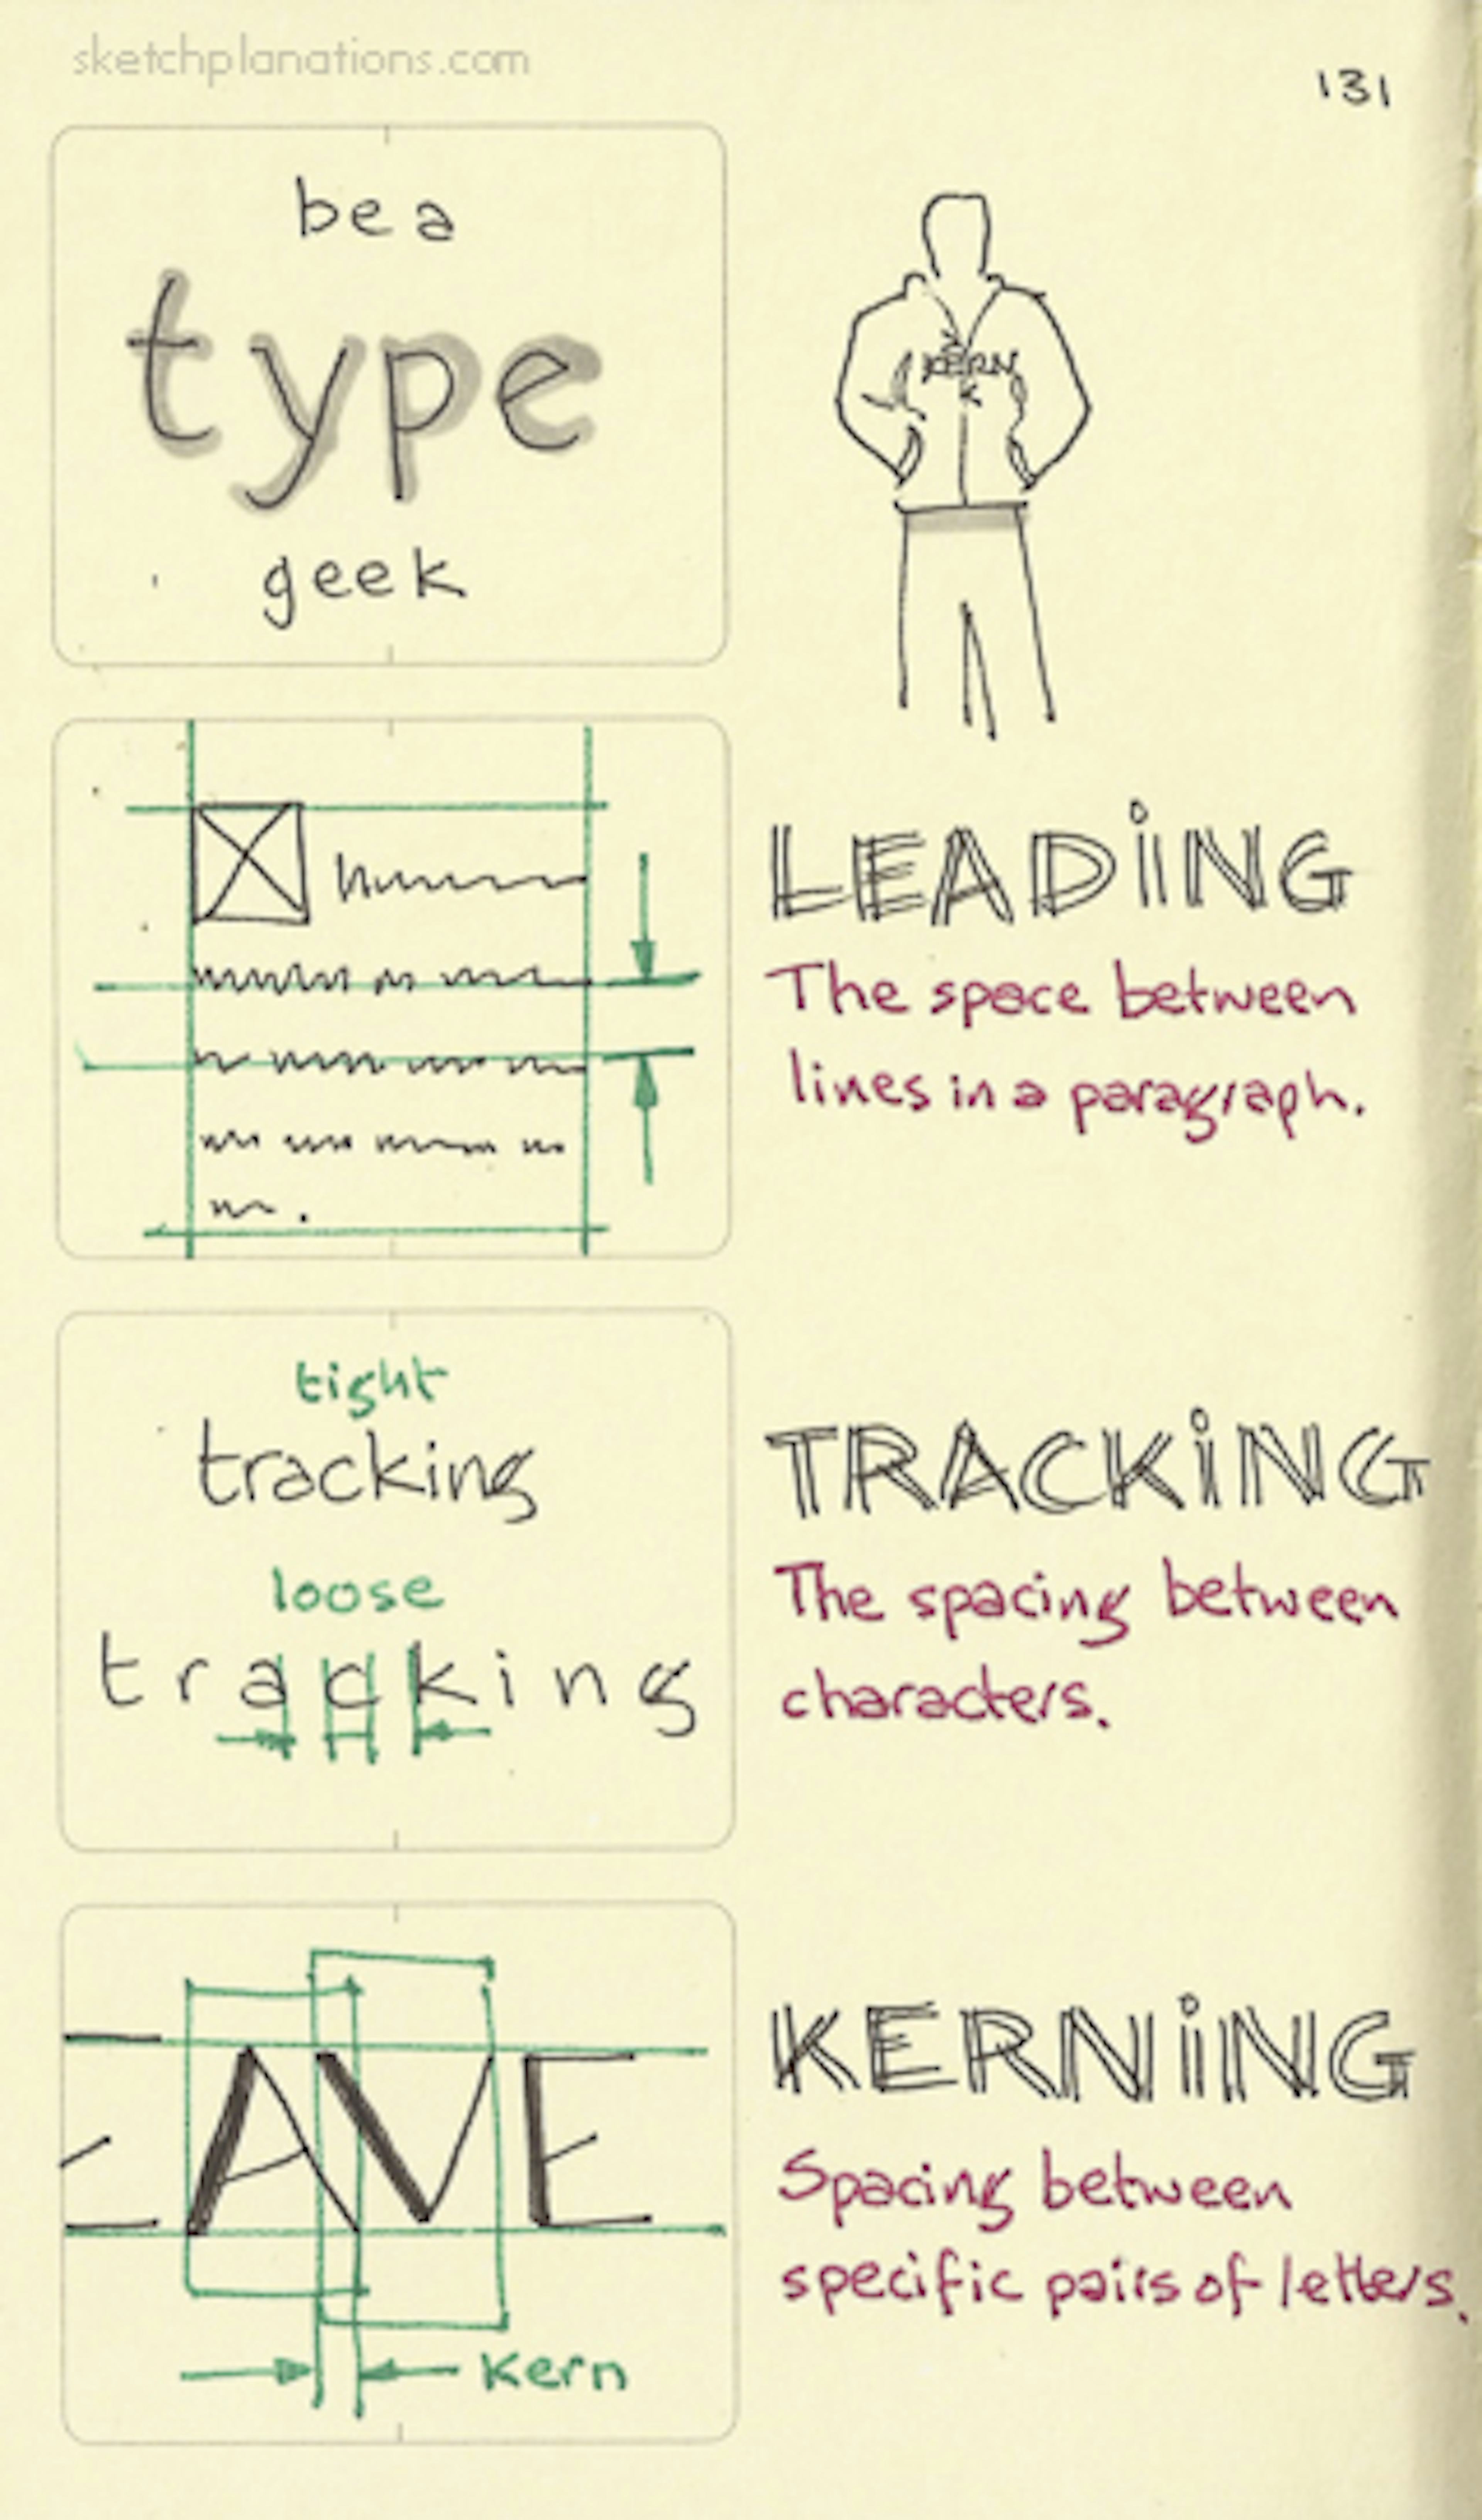 Be a type geek - Sketchplanations